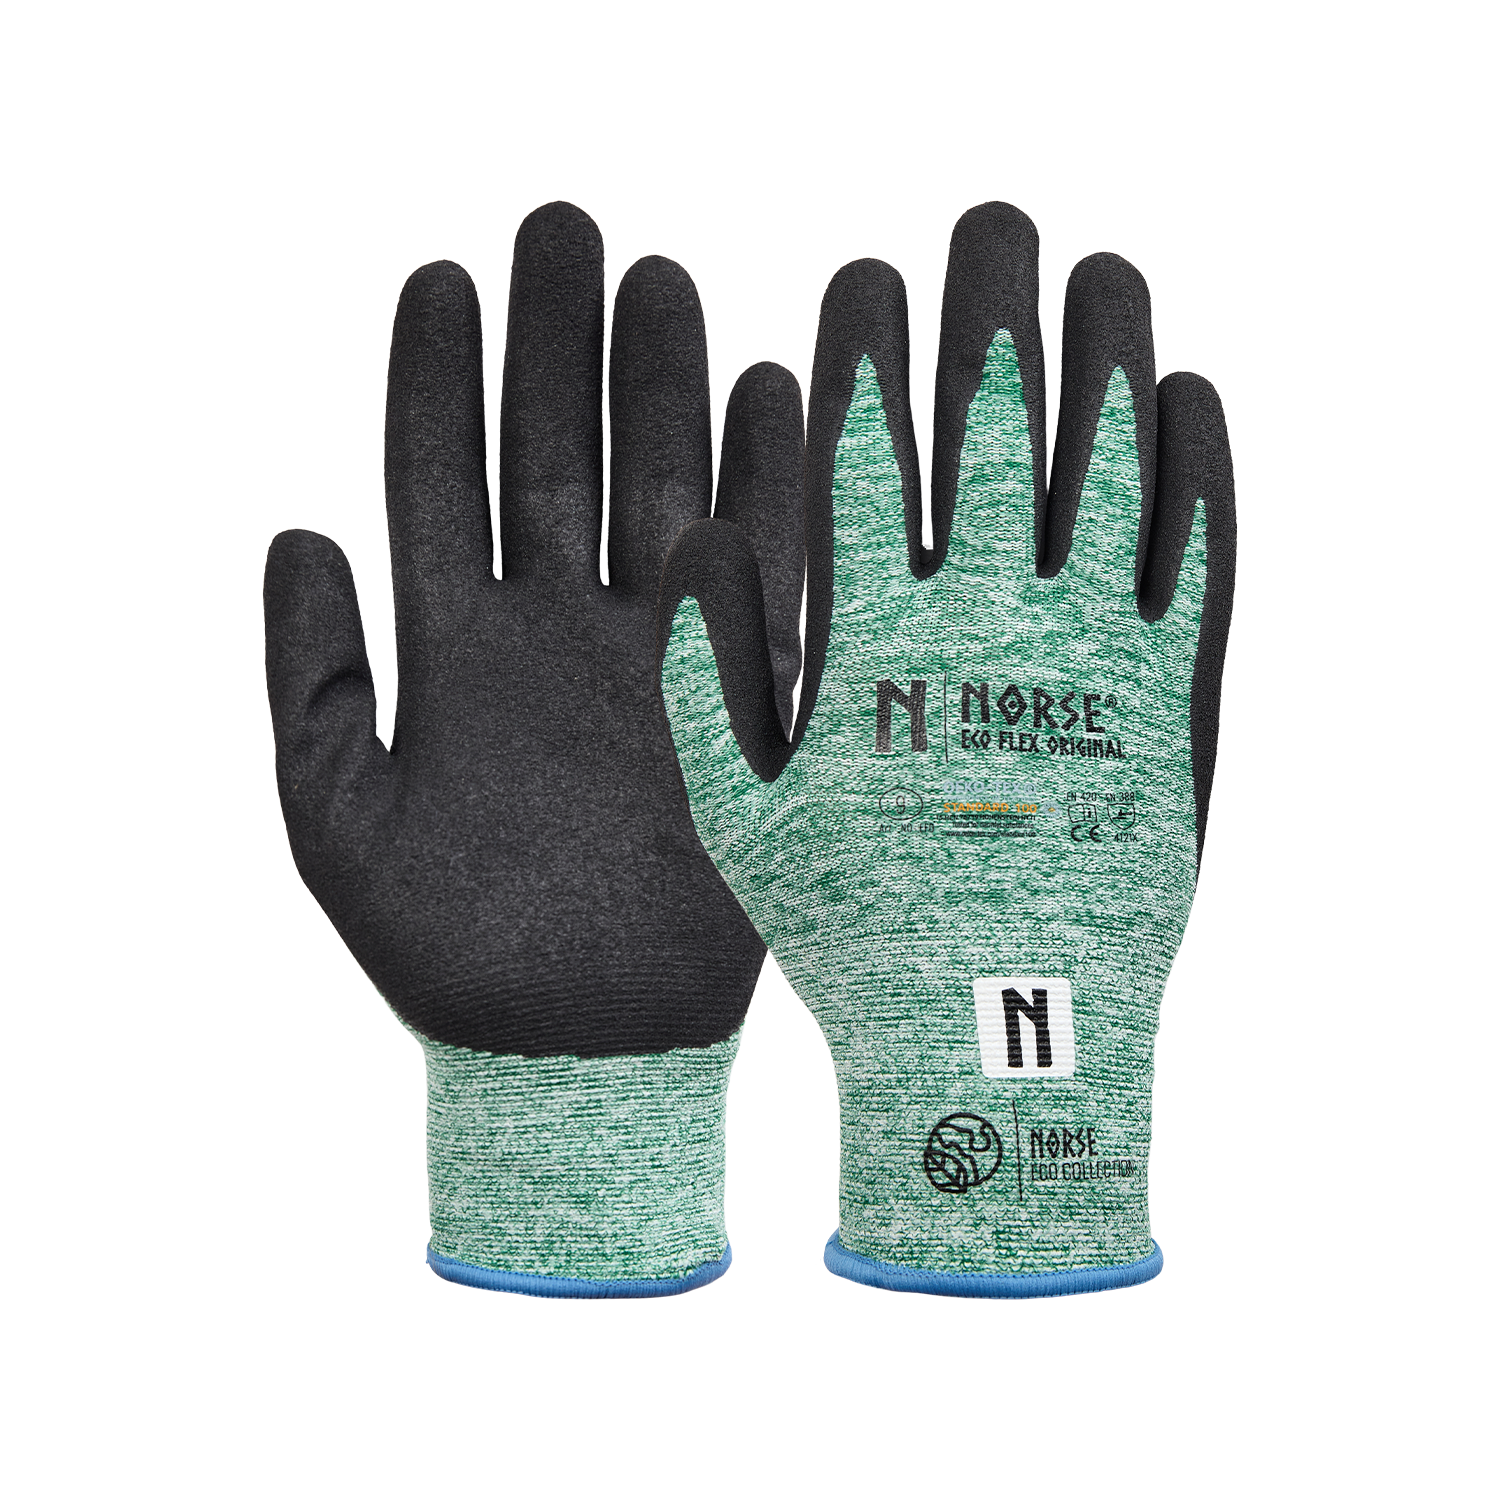 NORSE Eco Flex Original assembly gloves size 11